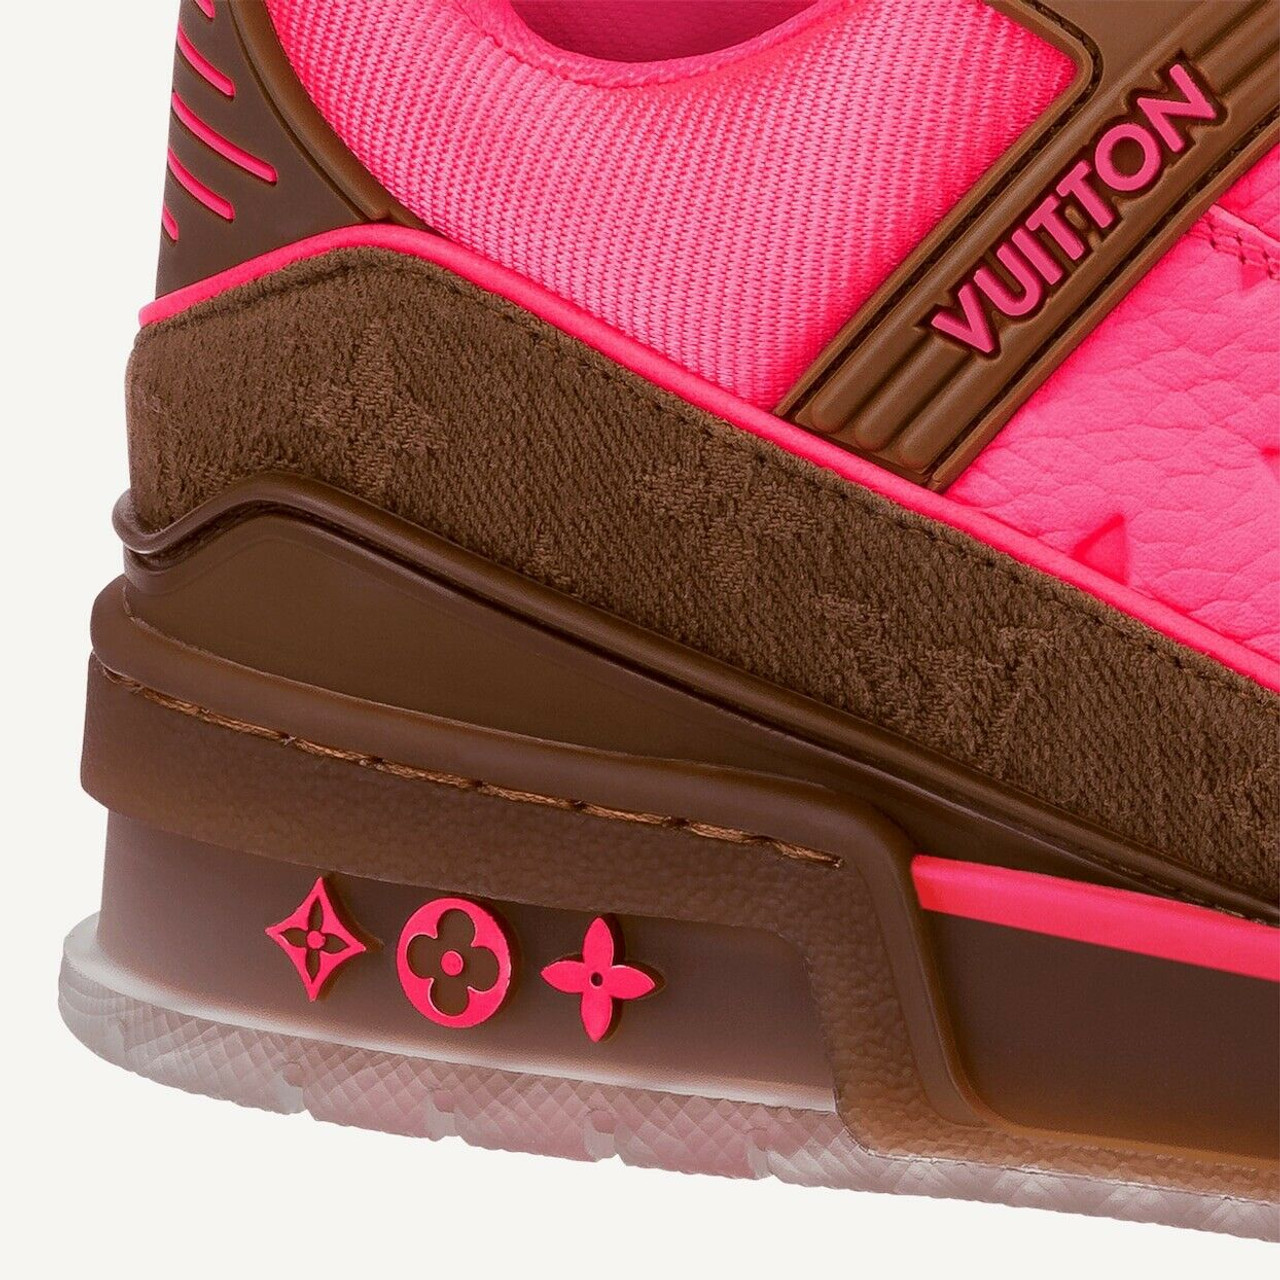 Louis Vuitton LV Pink Air Jordan High Top Shoes Sneakers - Tagotee